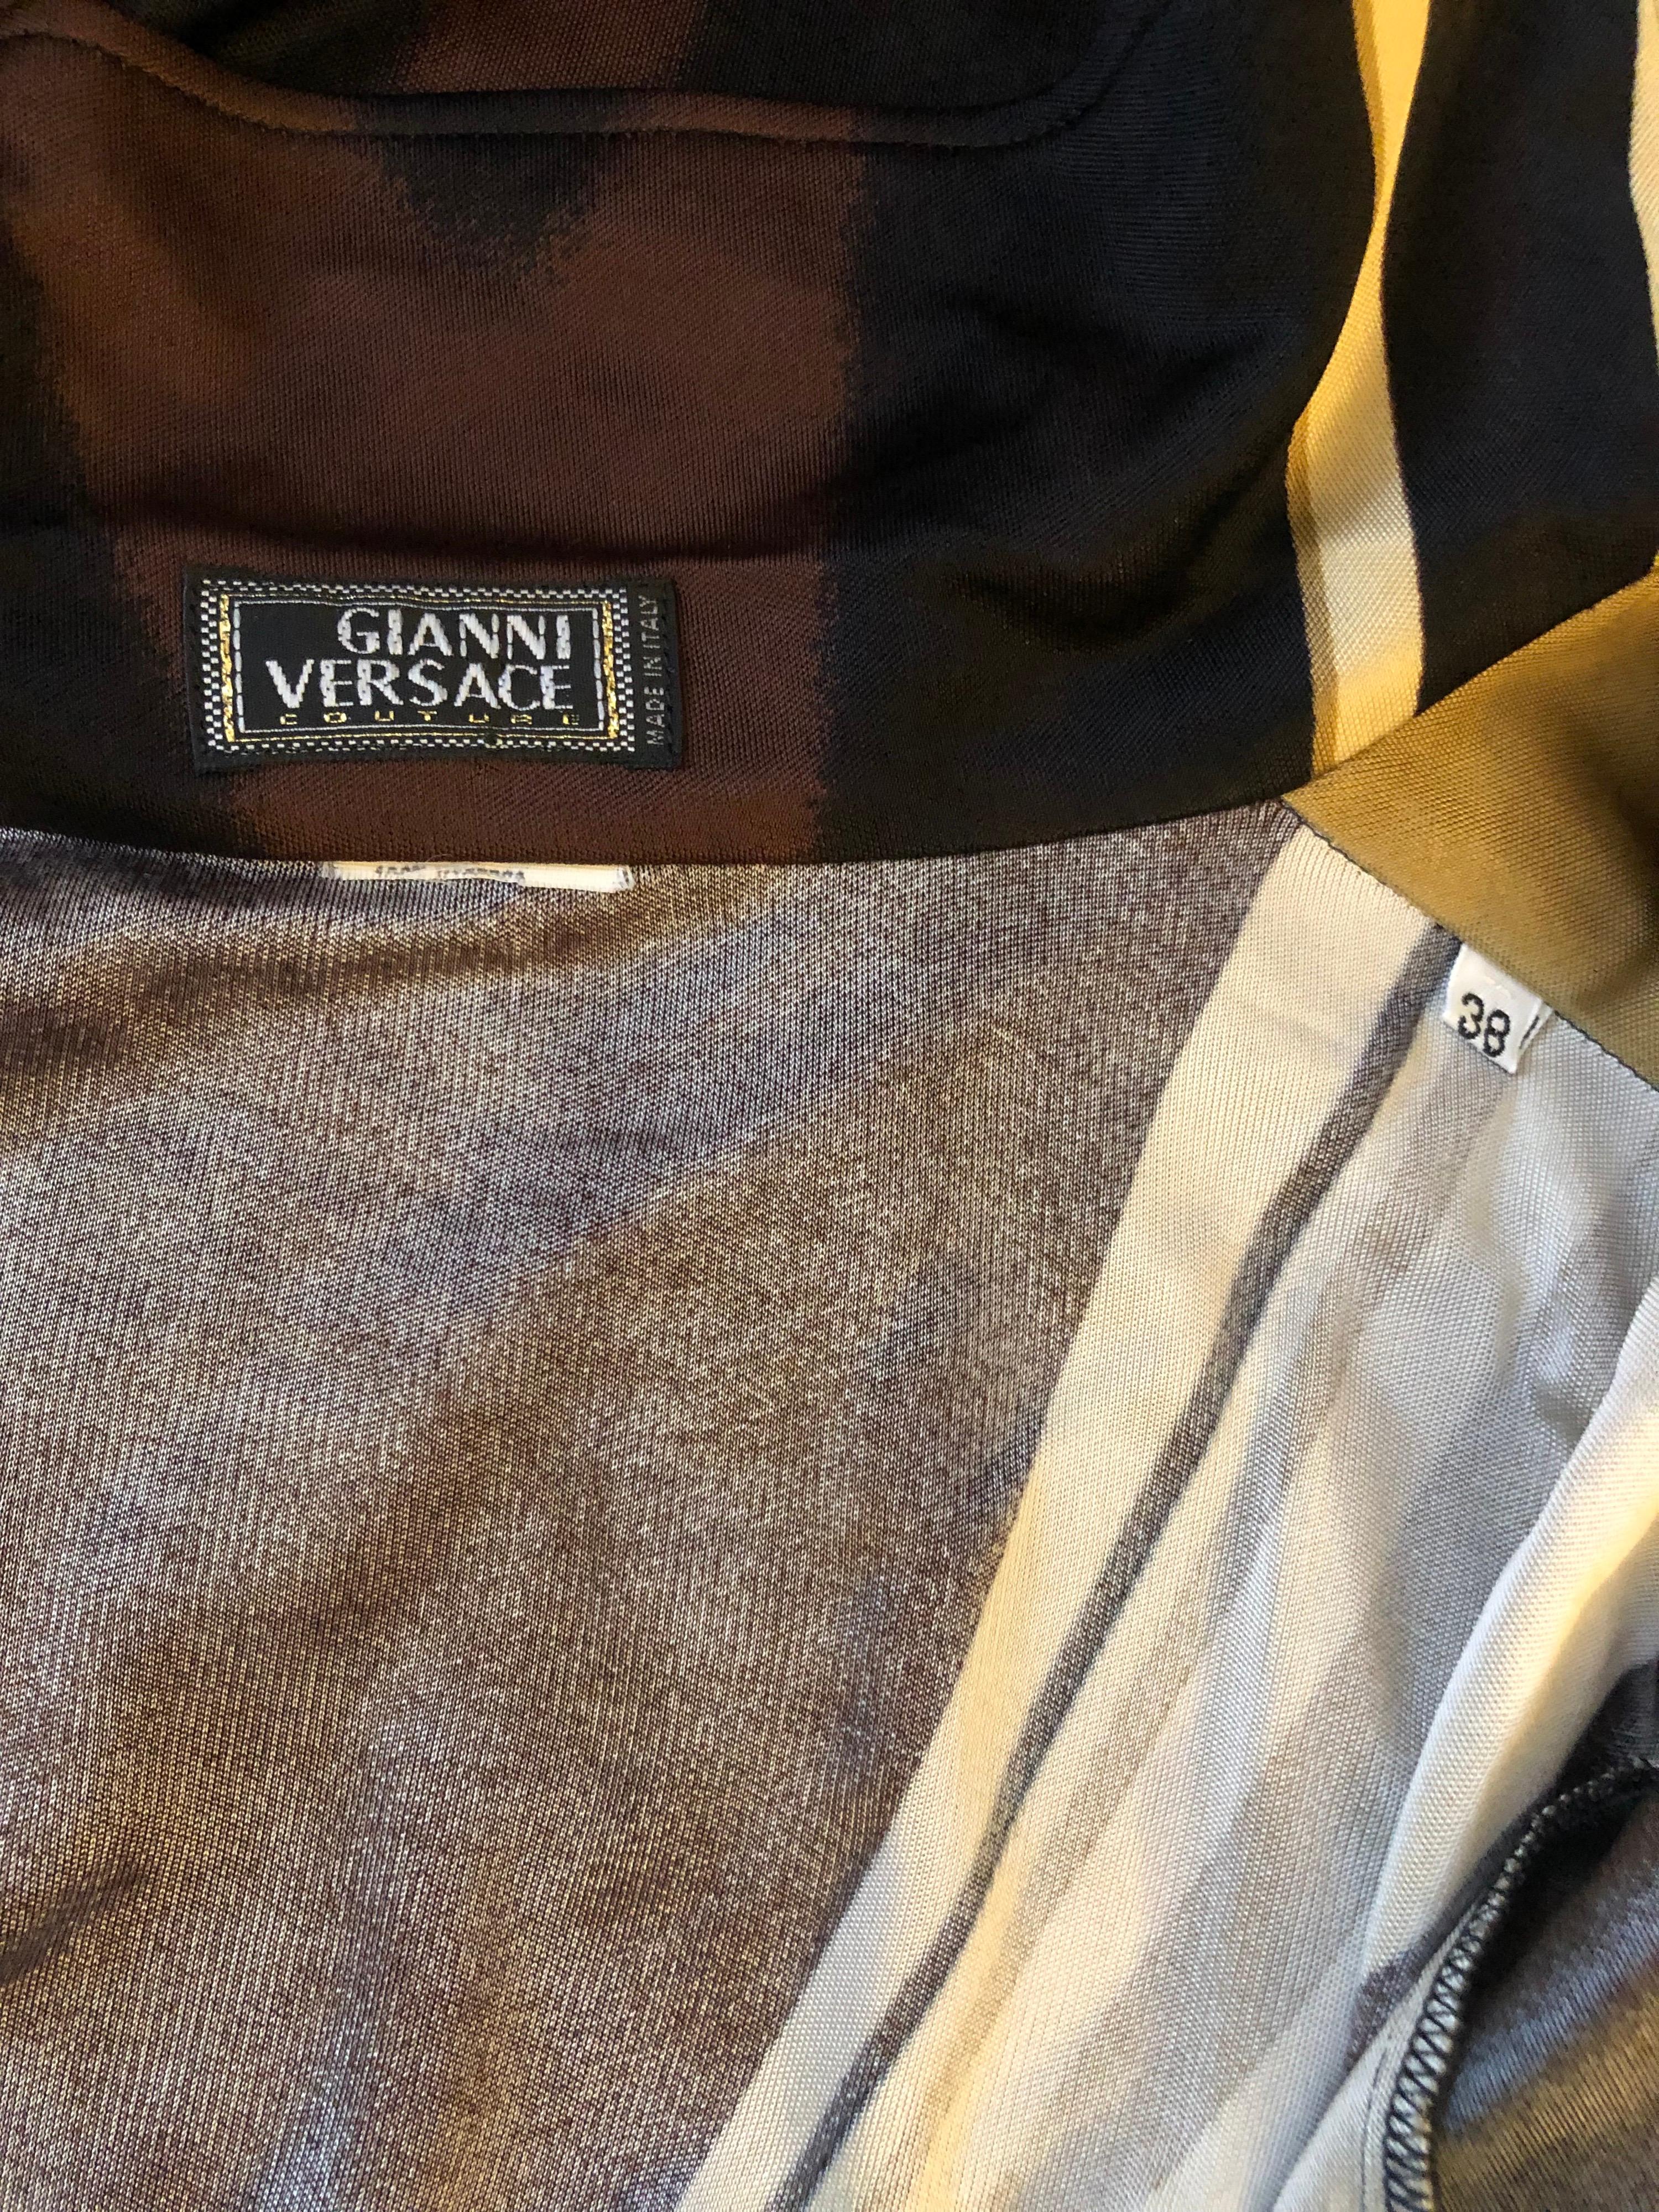 Women's Gianni Versace F/W 2000 Wrap Plunged Geometric Print Dress For Sale